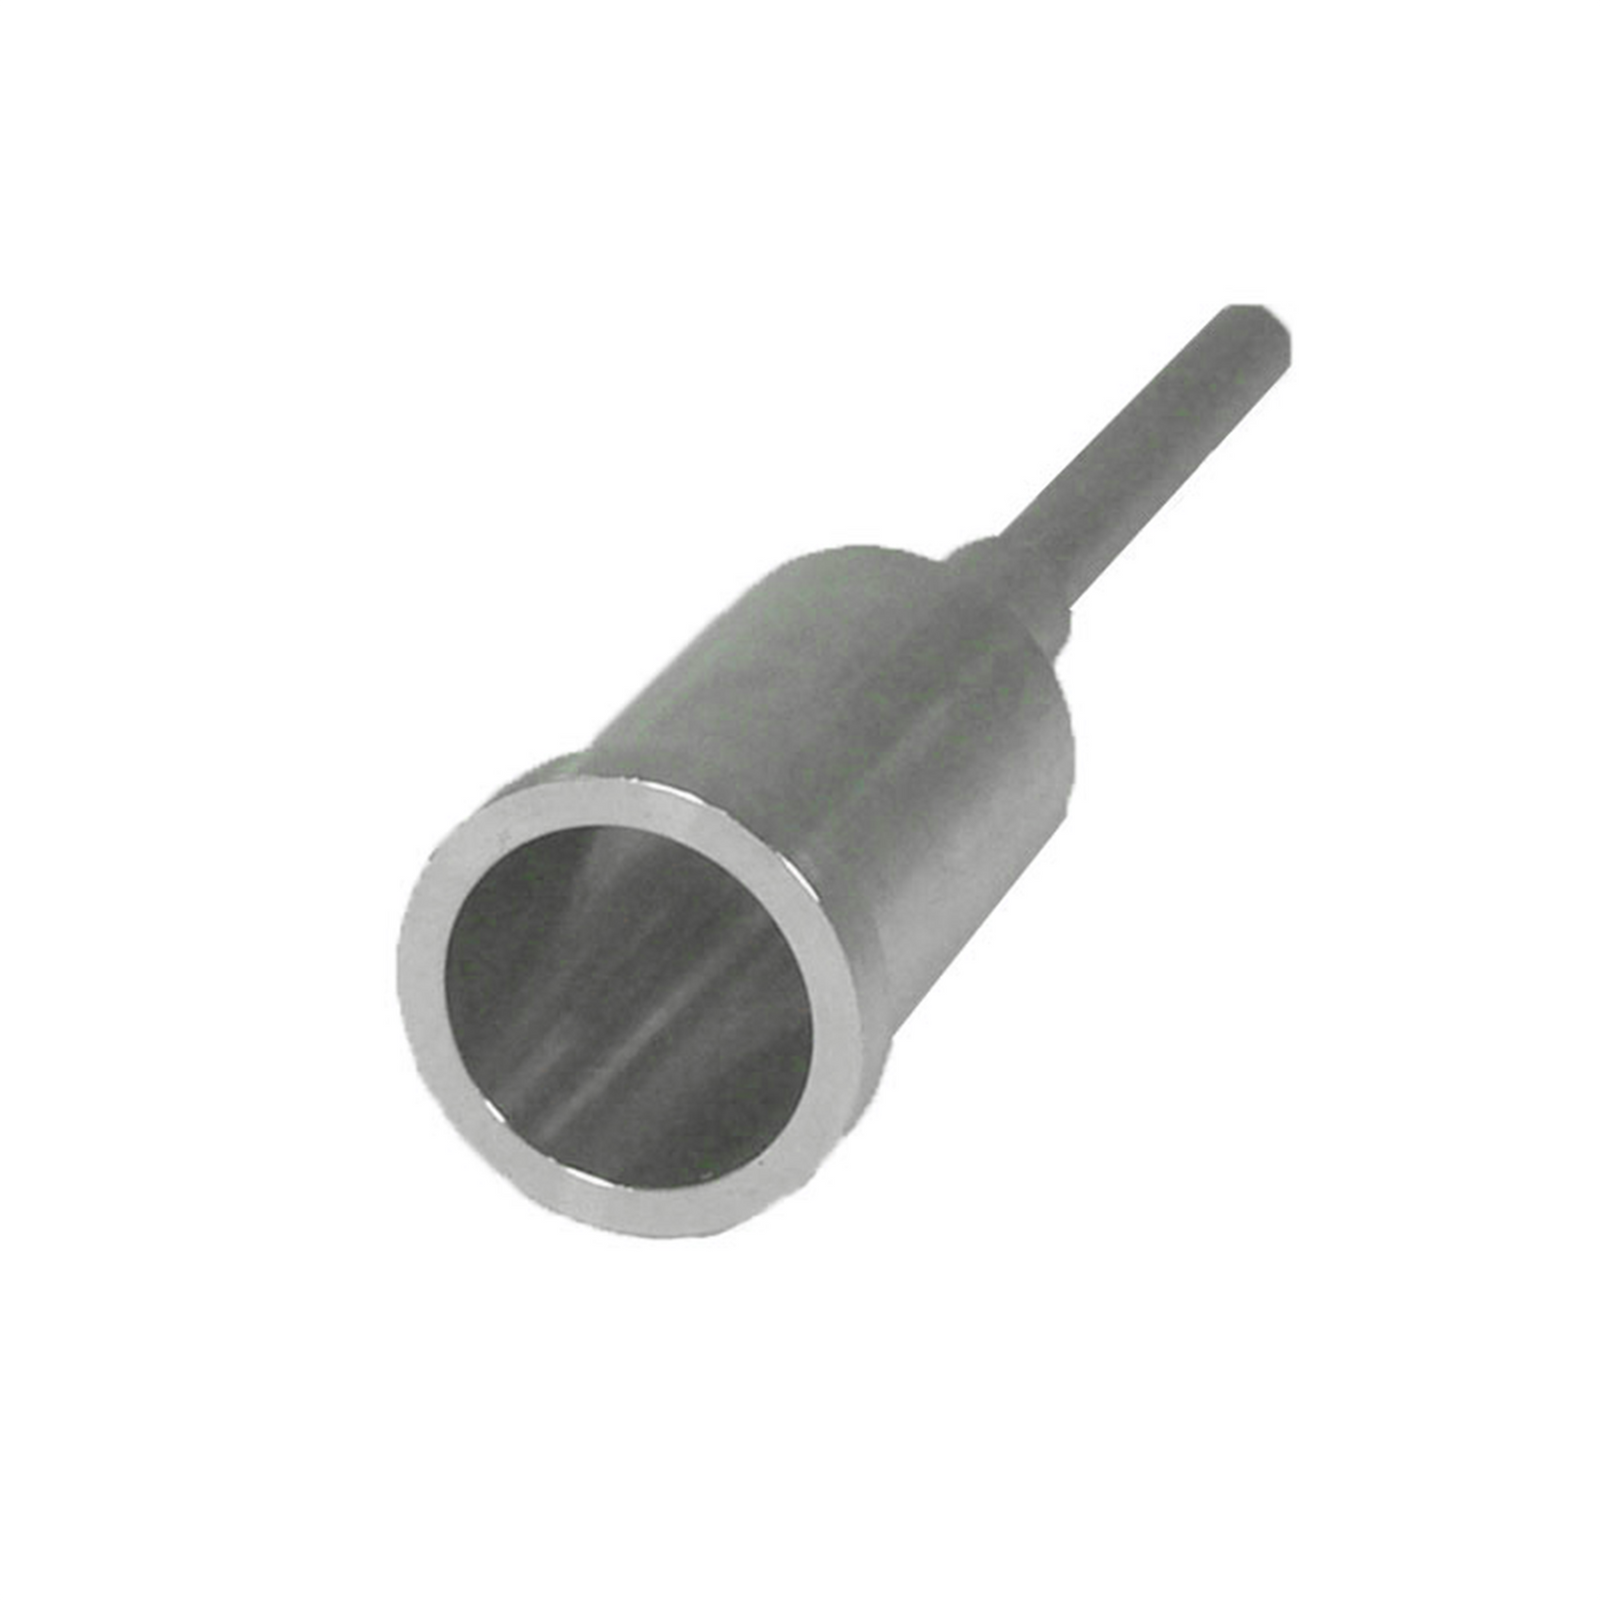 6mm dispensing nozzle filling tip